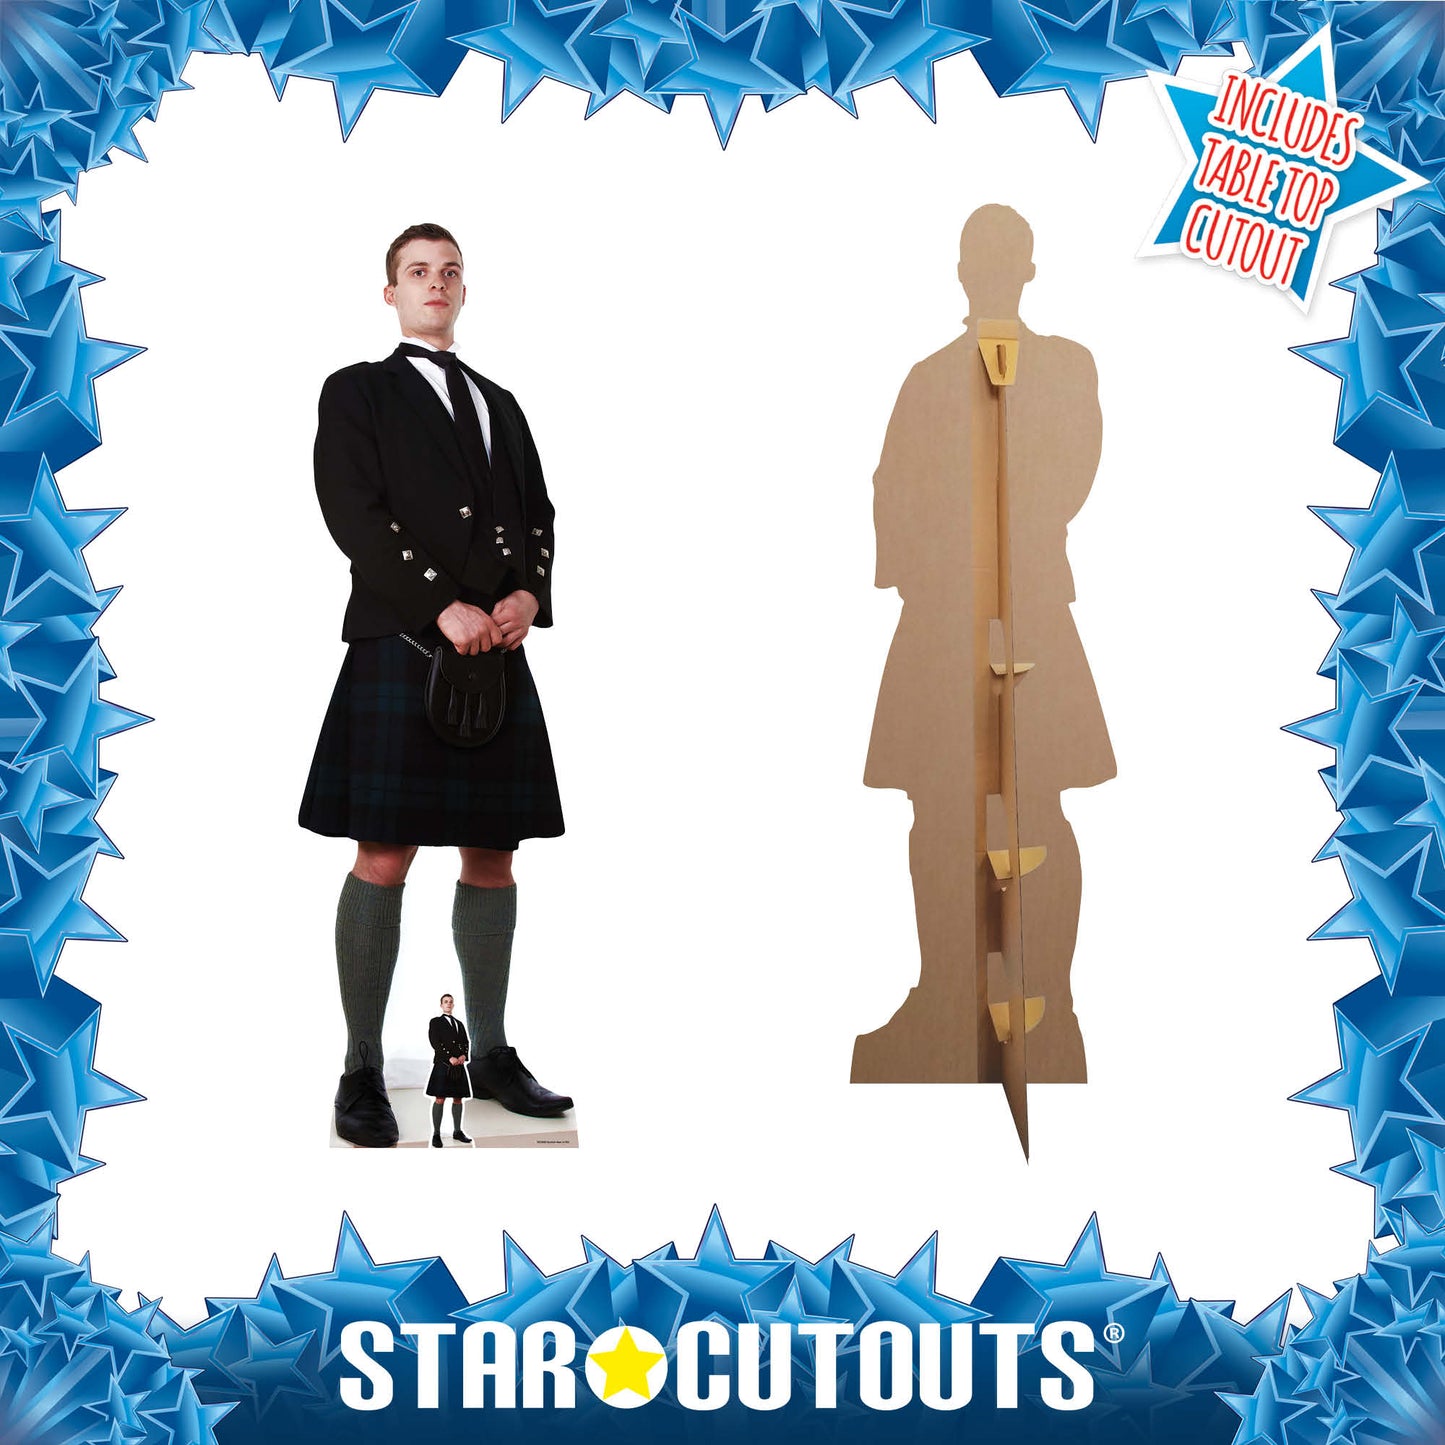 SC2030 Scottish Man in Kilt Cardboard Cut Out Height 183cm